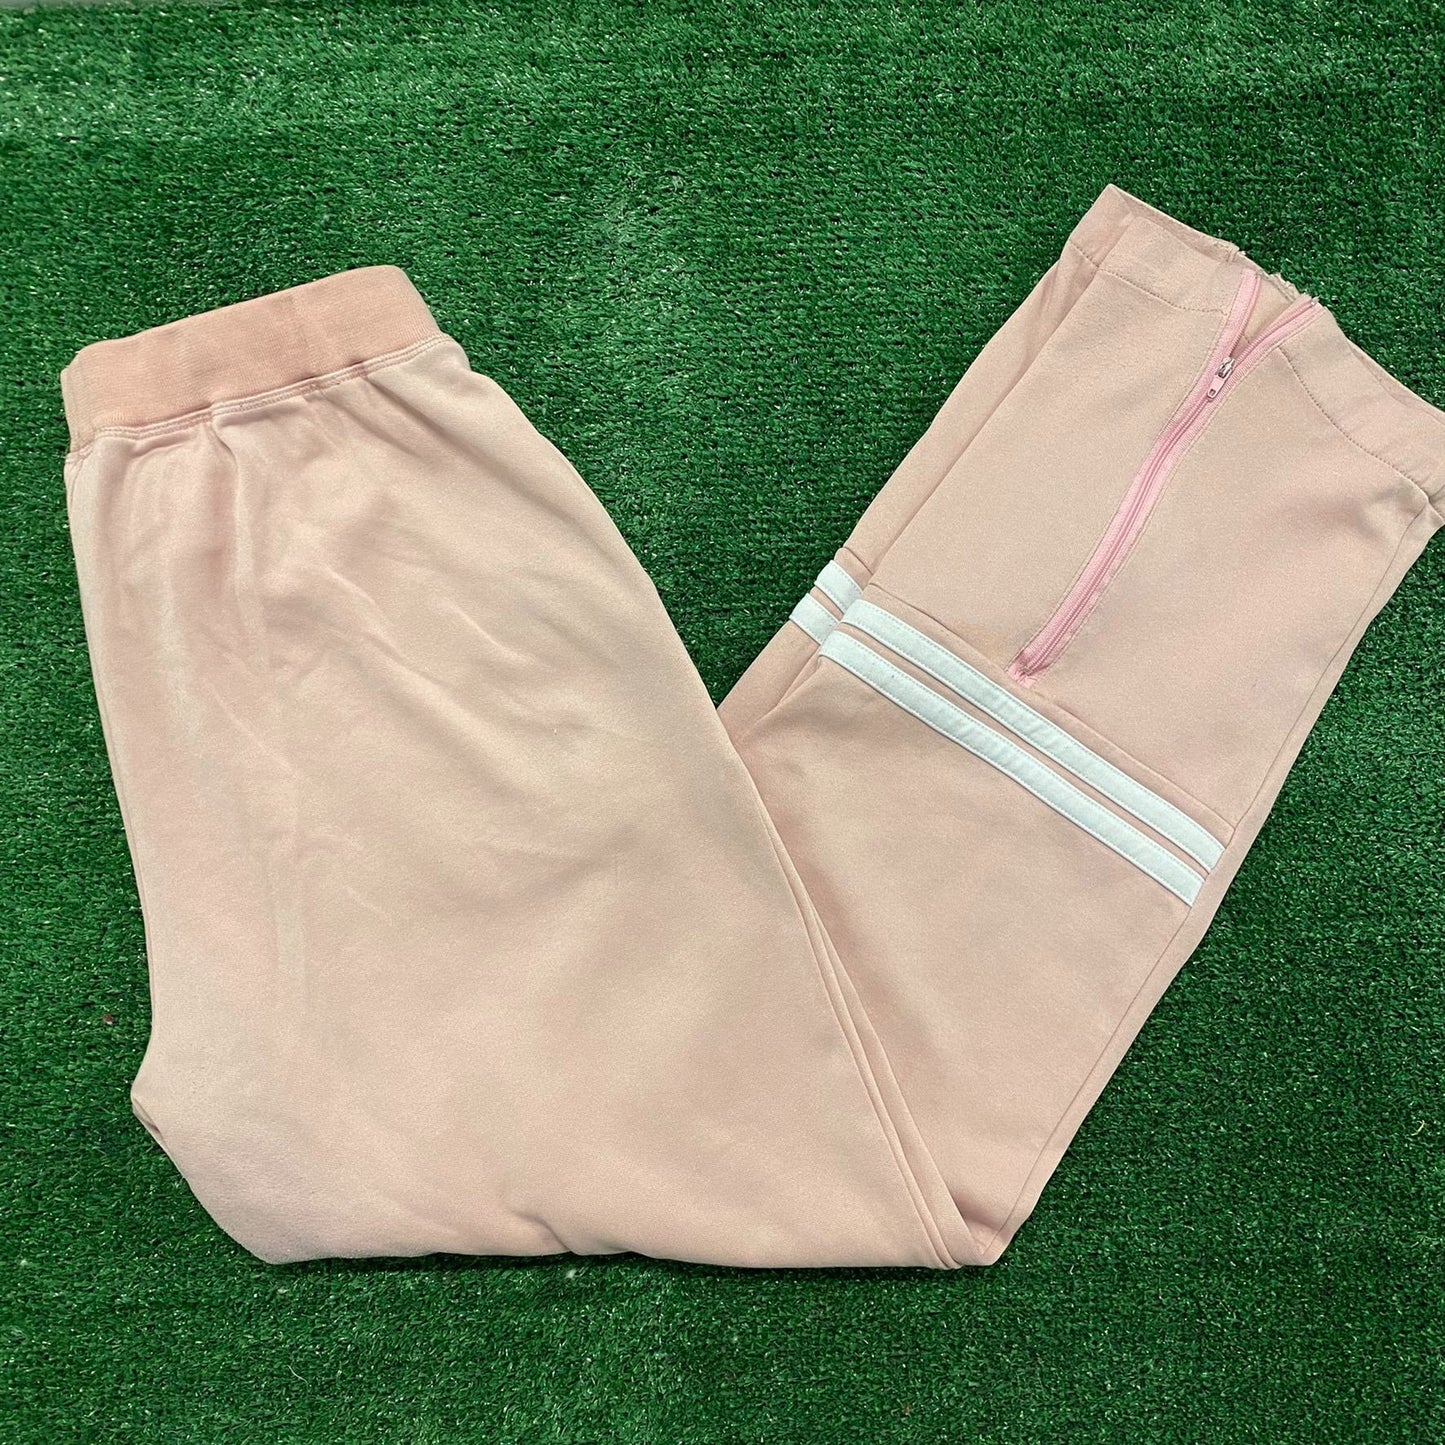 Sergio Tacchini Orion Sample Pink Sweatpants Track Pants